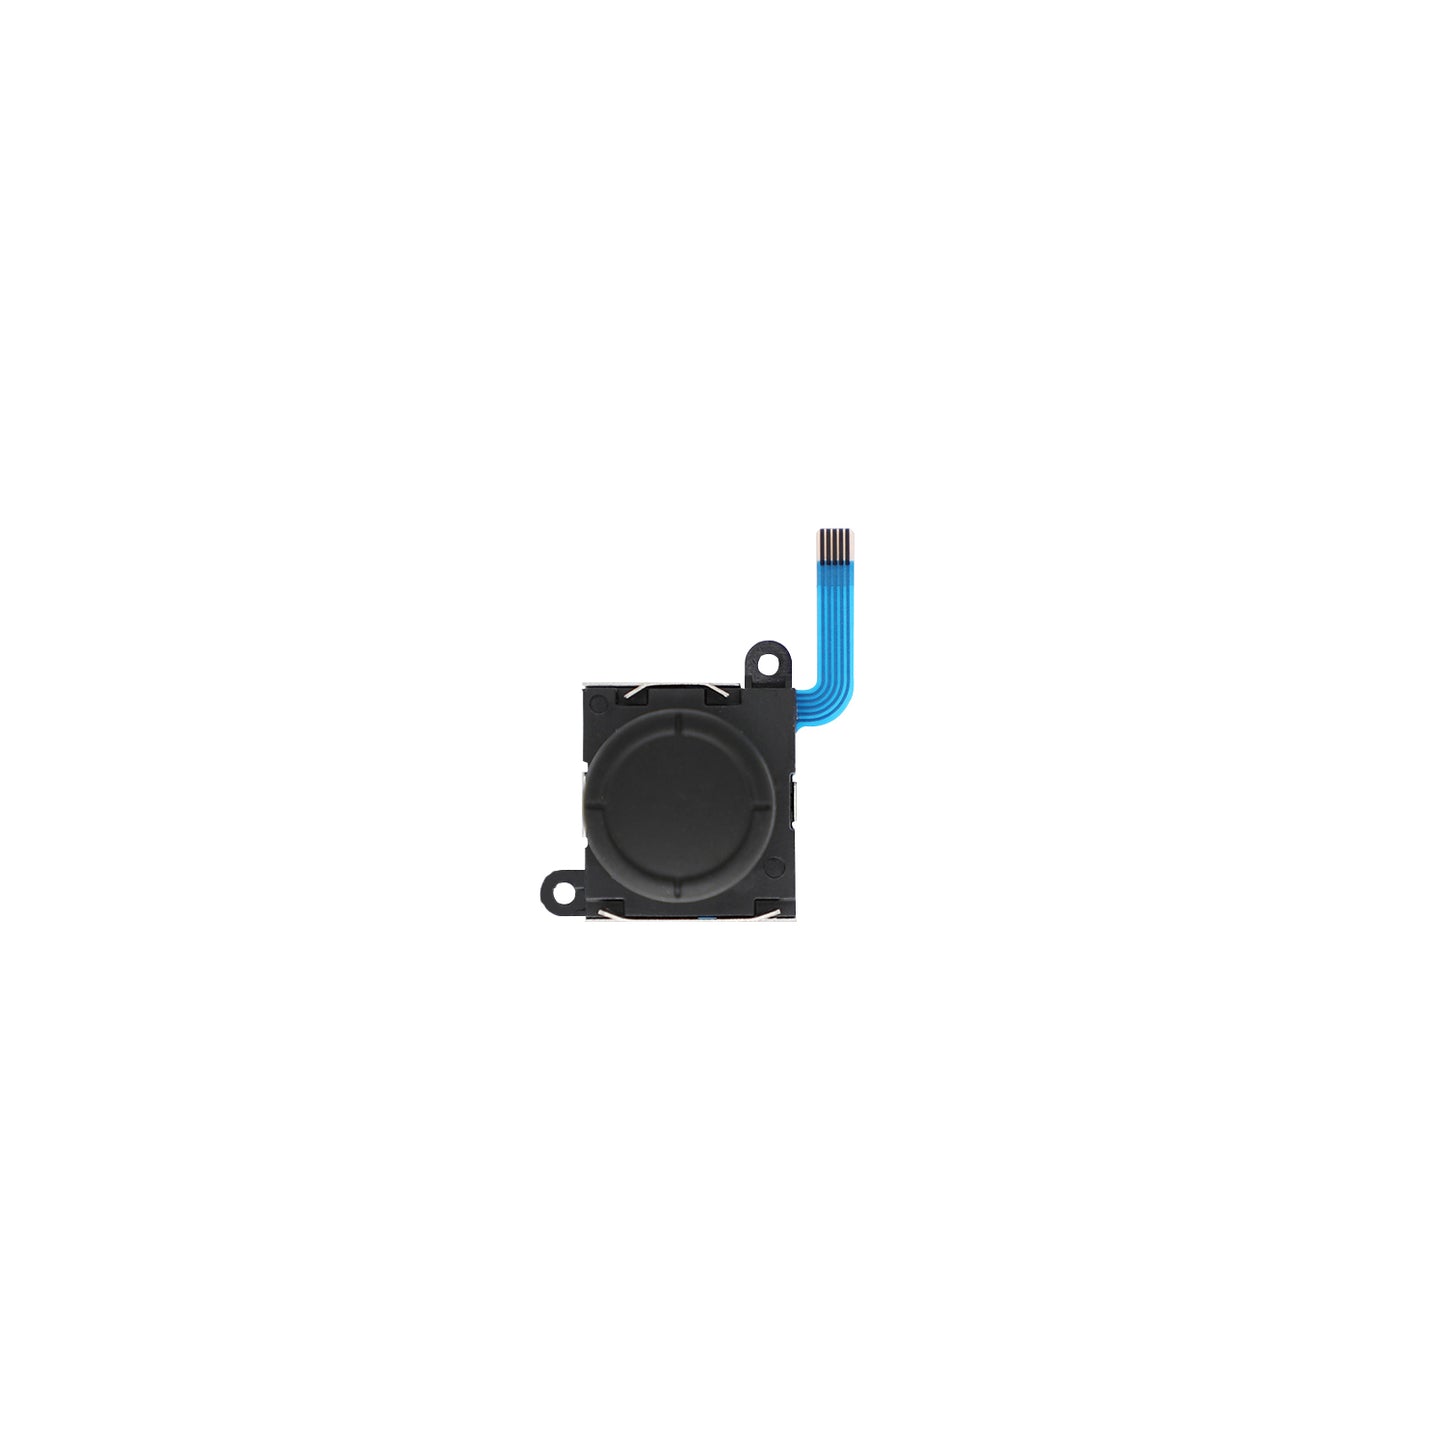 HAUZIK Stick Replacement for Joy Con Fix Controller Drift Compatible with Nintendo Switch and Lite (2 Pcs)